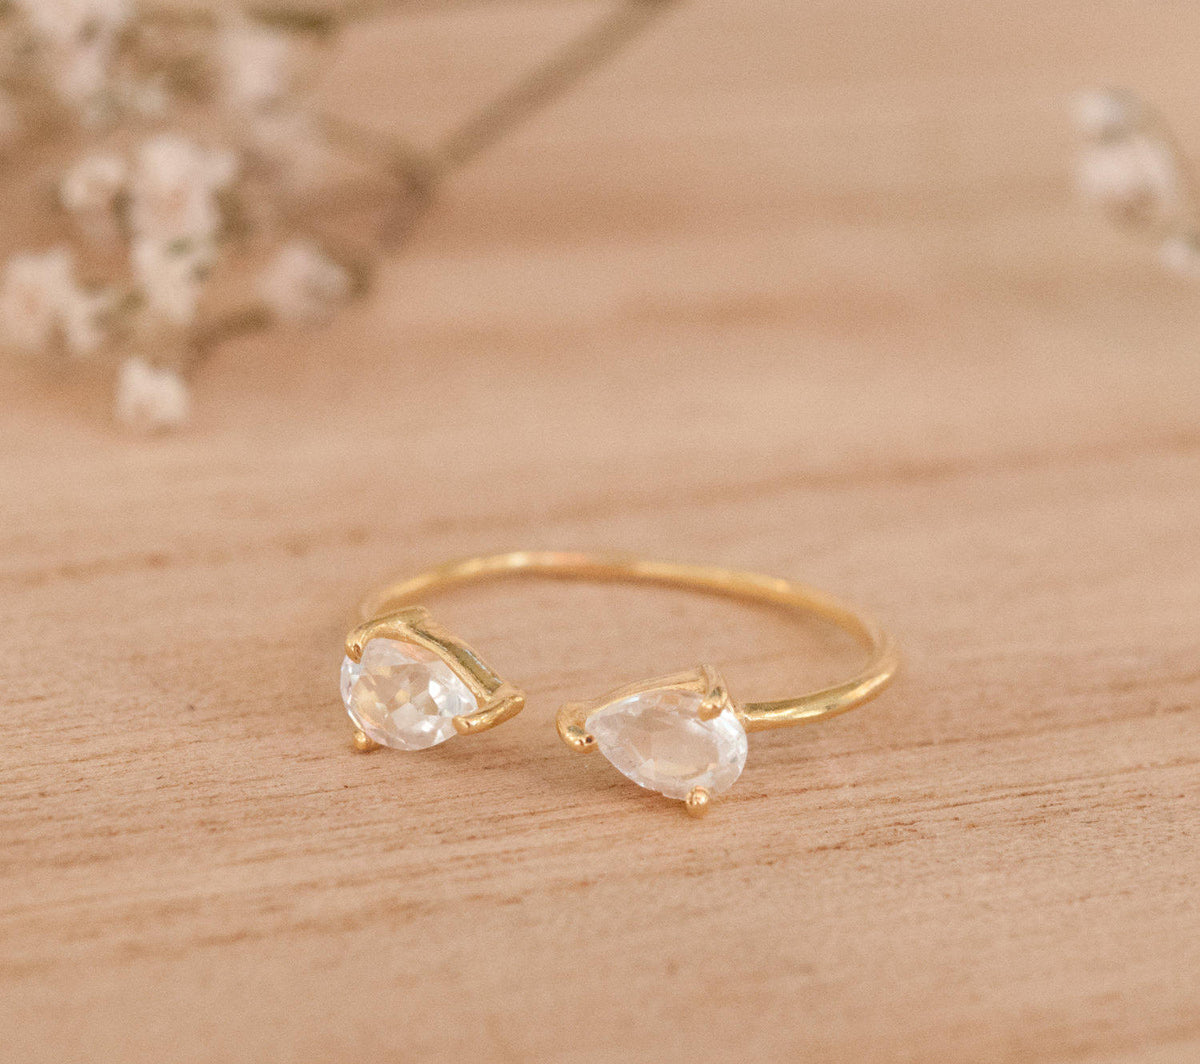 SALE Adjustable Turquoise Ring * Gold Vermeil Ring * Gemstone Ring * Wedding * Engagement * Handmade * Boho BJR048